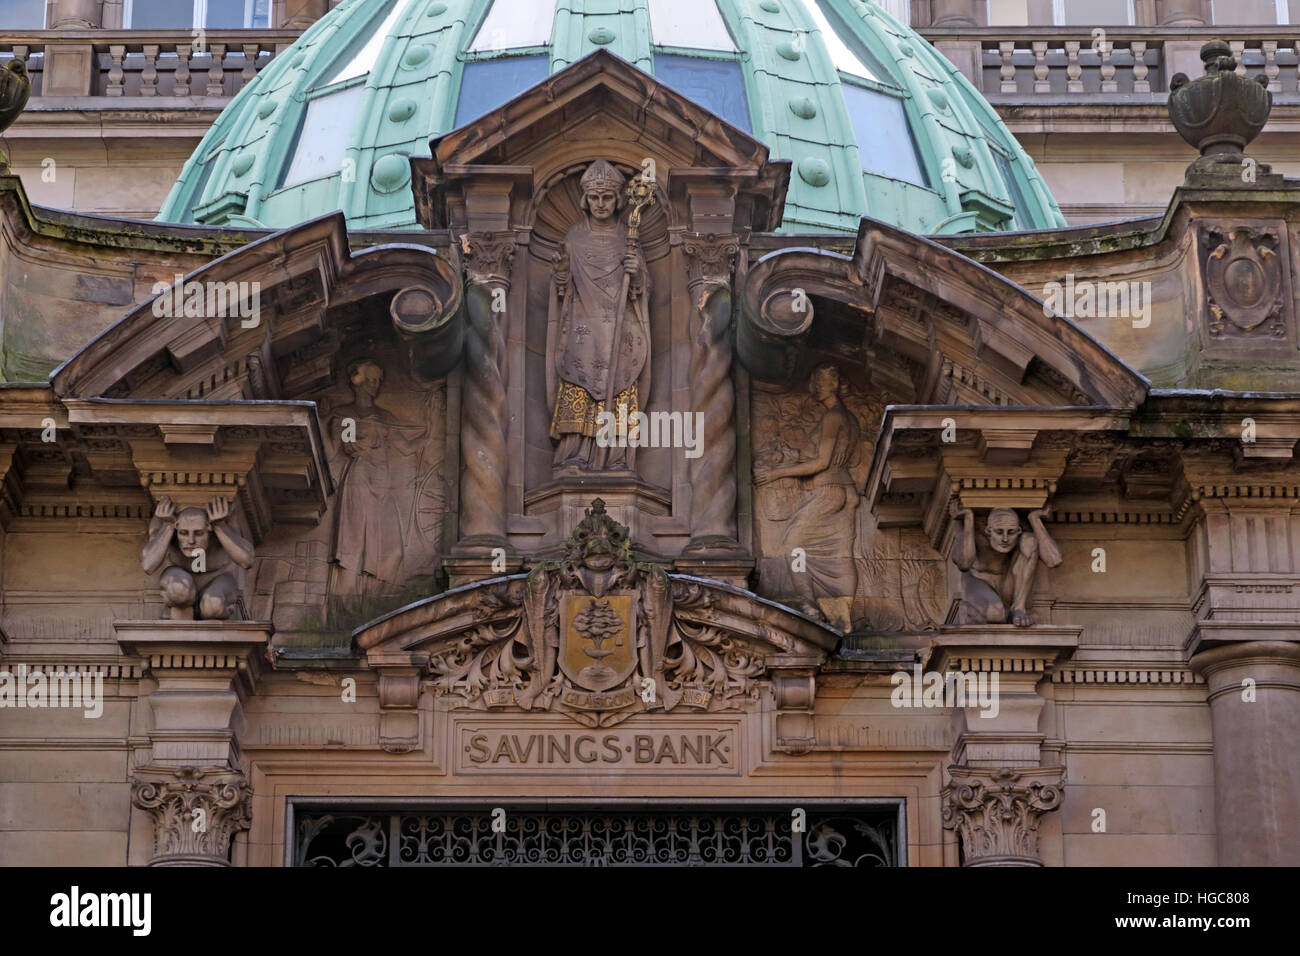 Savings bank with statue of Saint Mungo, Ingram St, Glasgow, City, Centre, Scotland, UK, G1 1DA Stock Photo